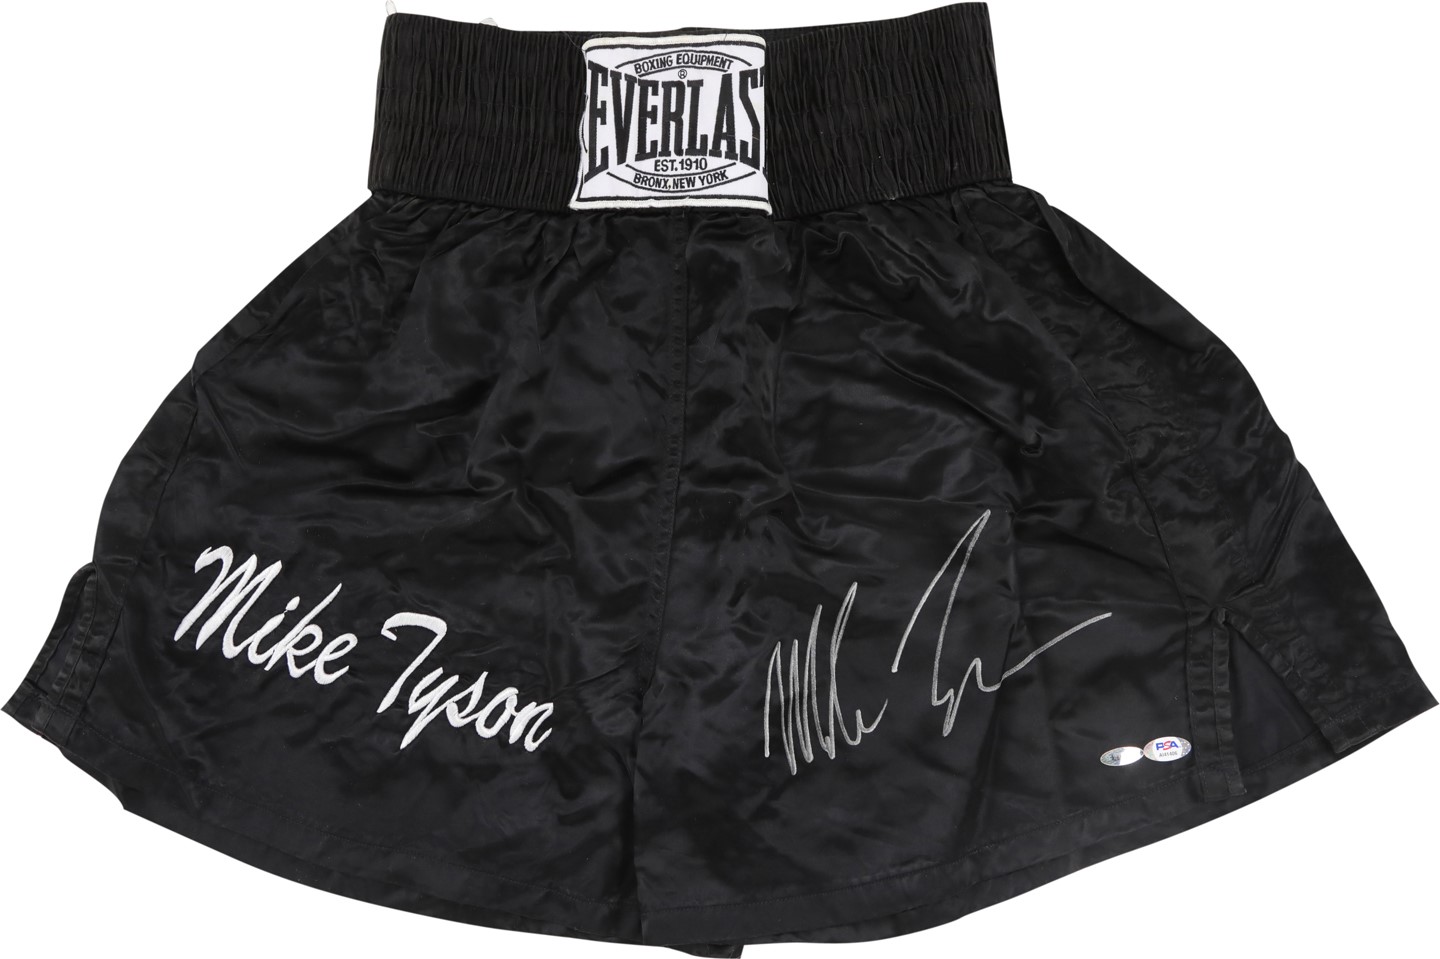 Muhammad Ali & Boxing - Mike Tyson Signed Boxing Trunks (PSA)